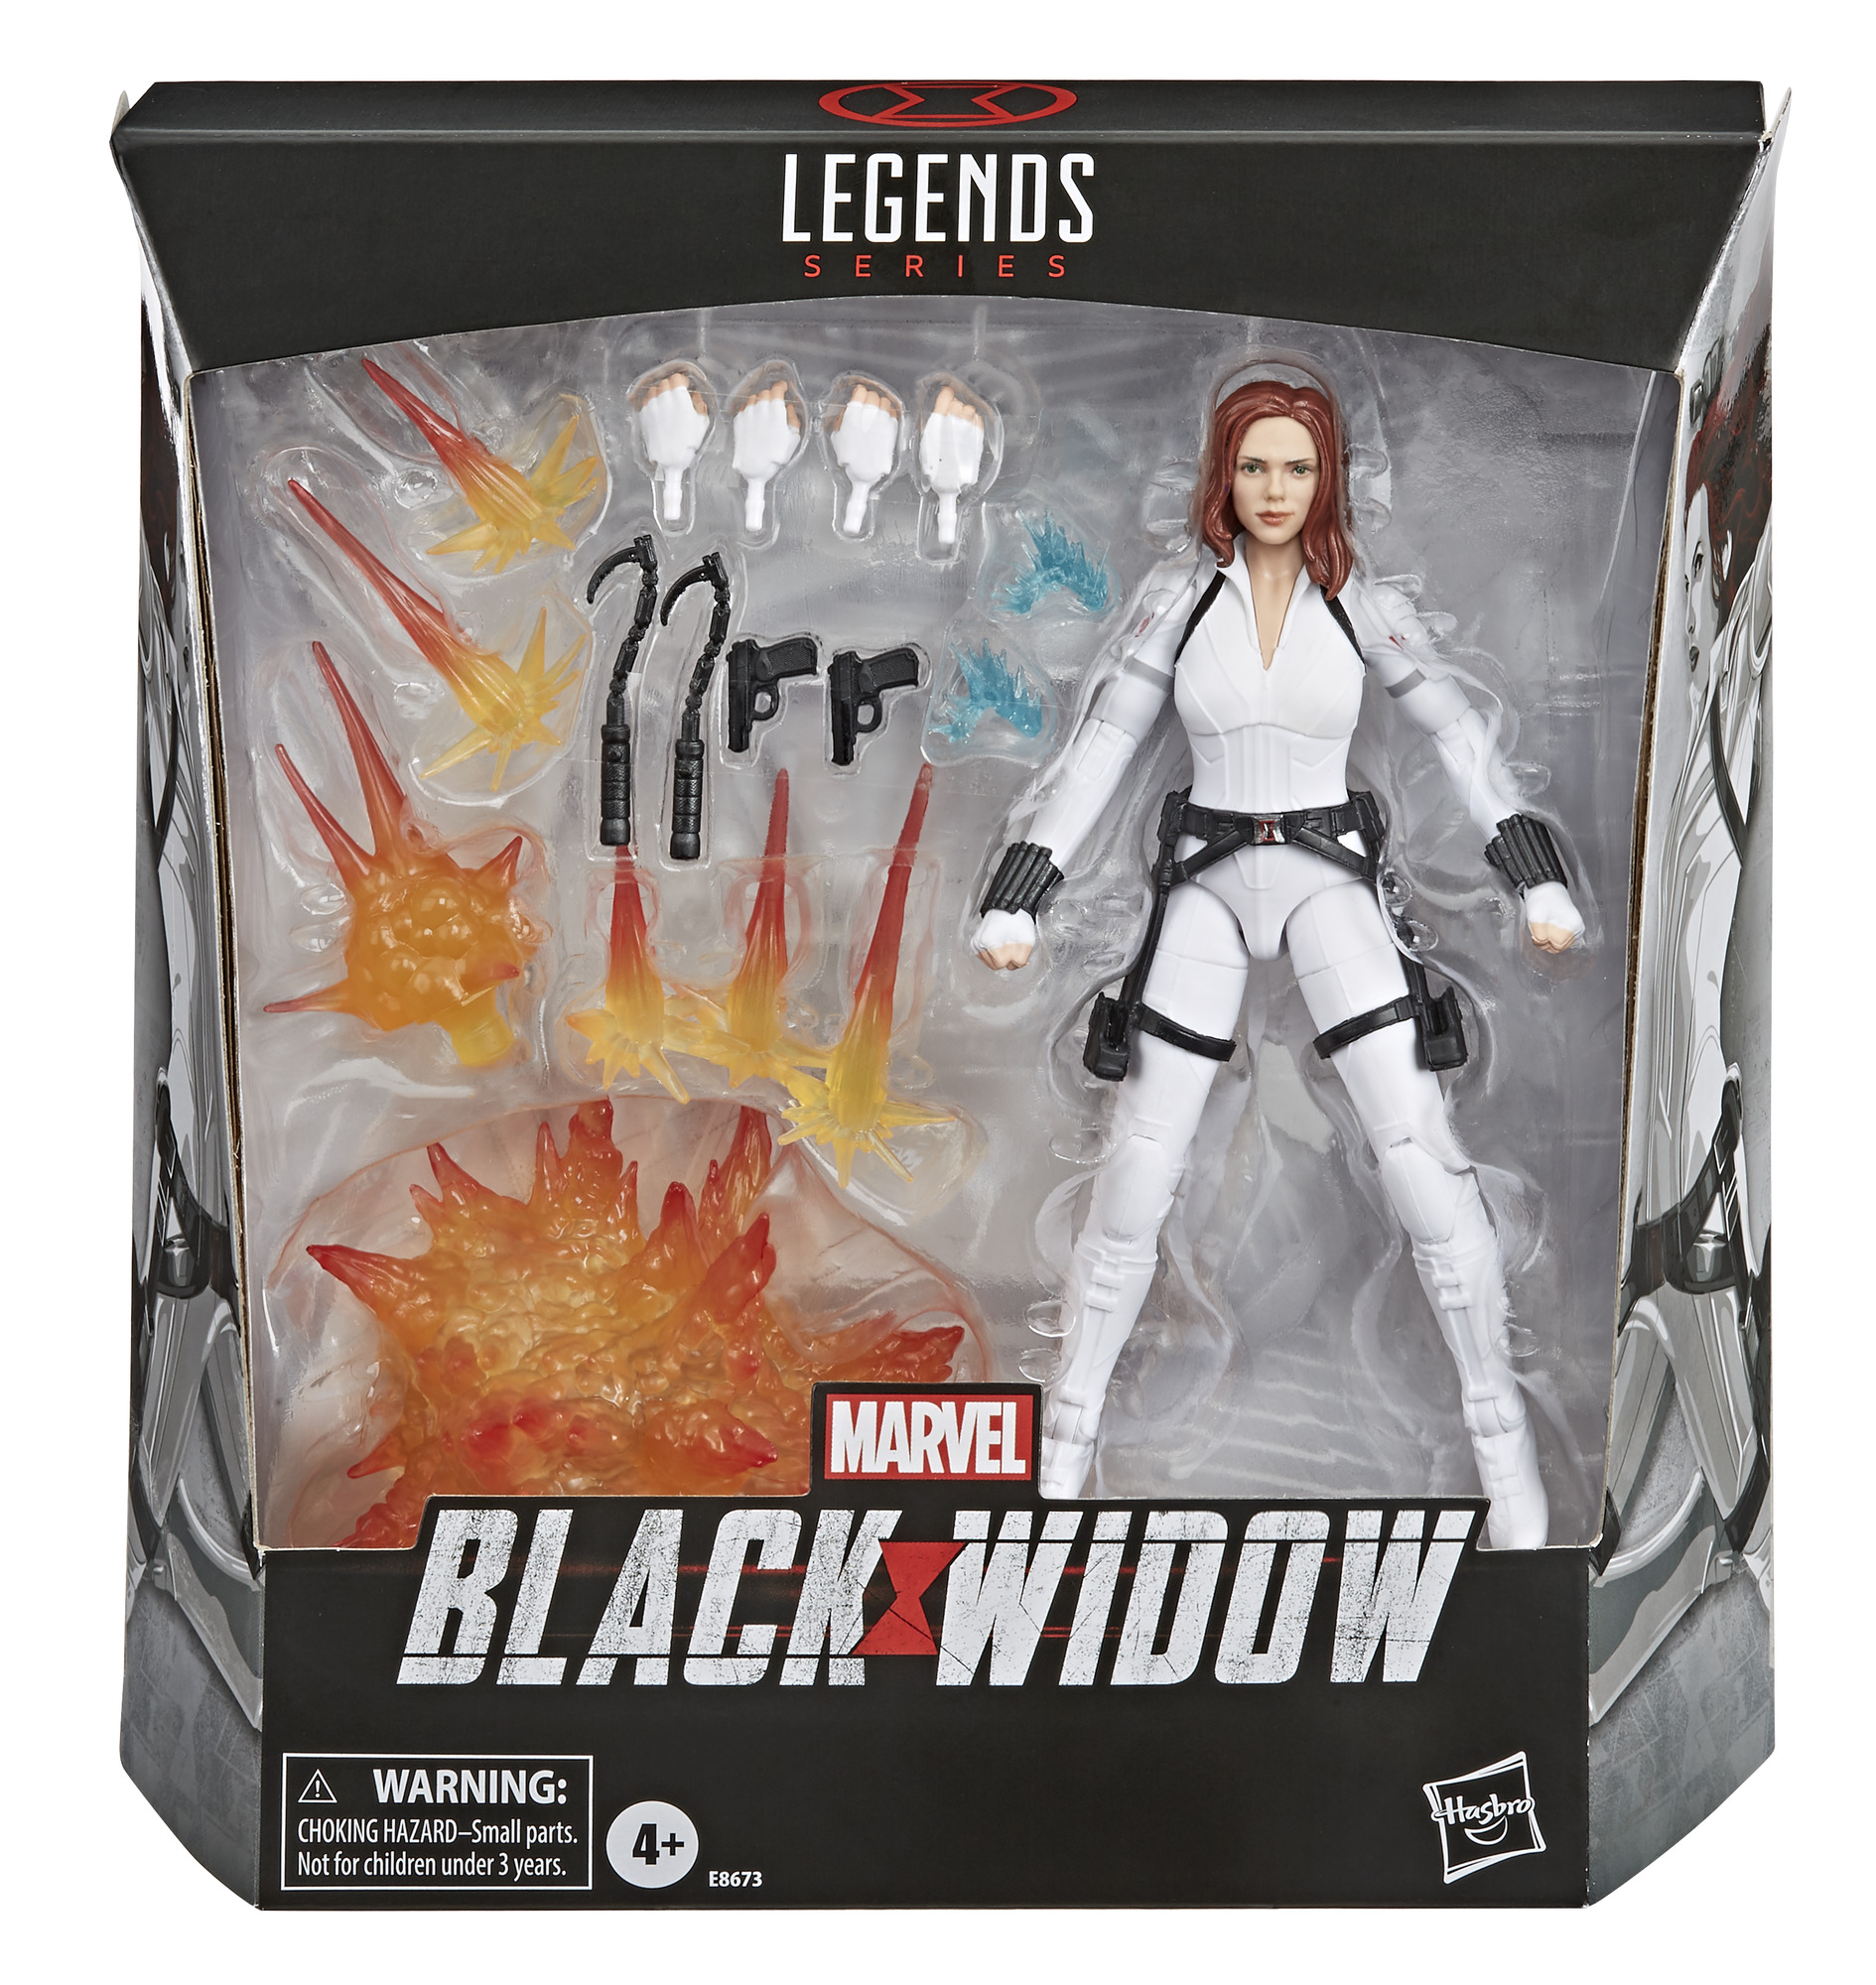 Blast Prop from Deluxe Black Widow Marvel Legends 5x Explosion Effects Pieces